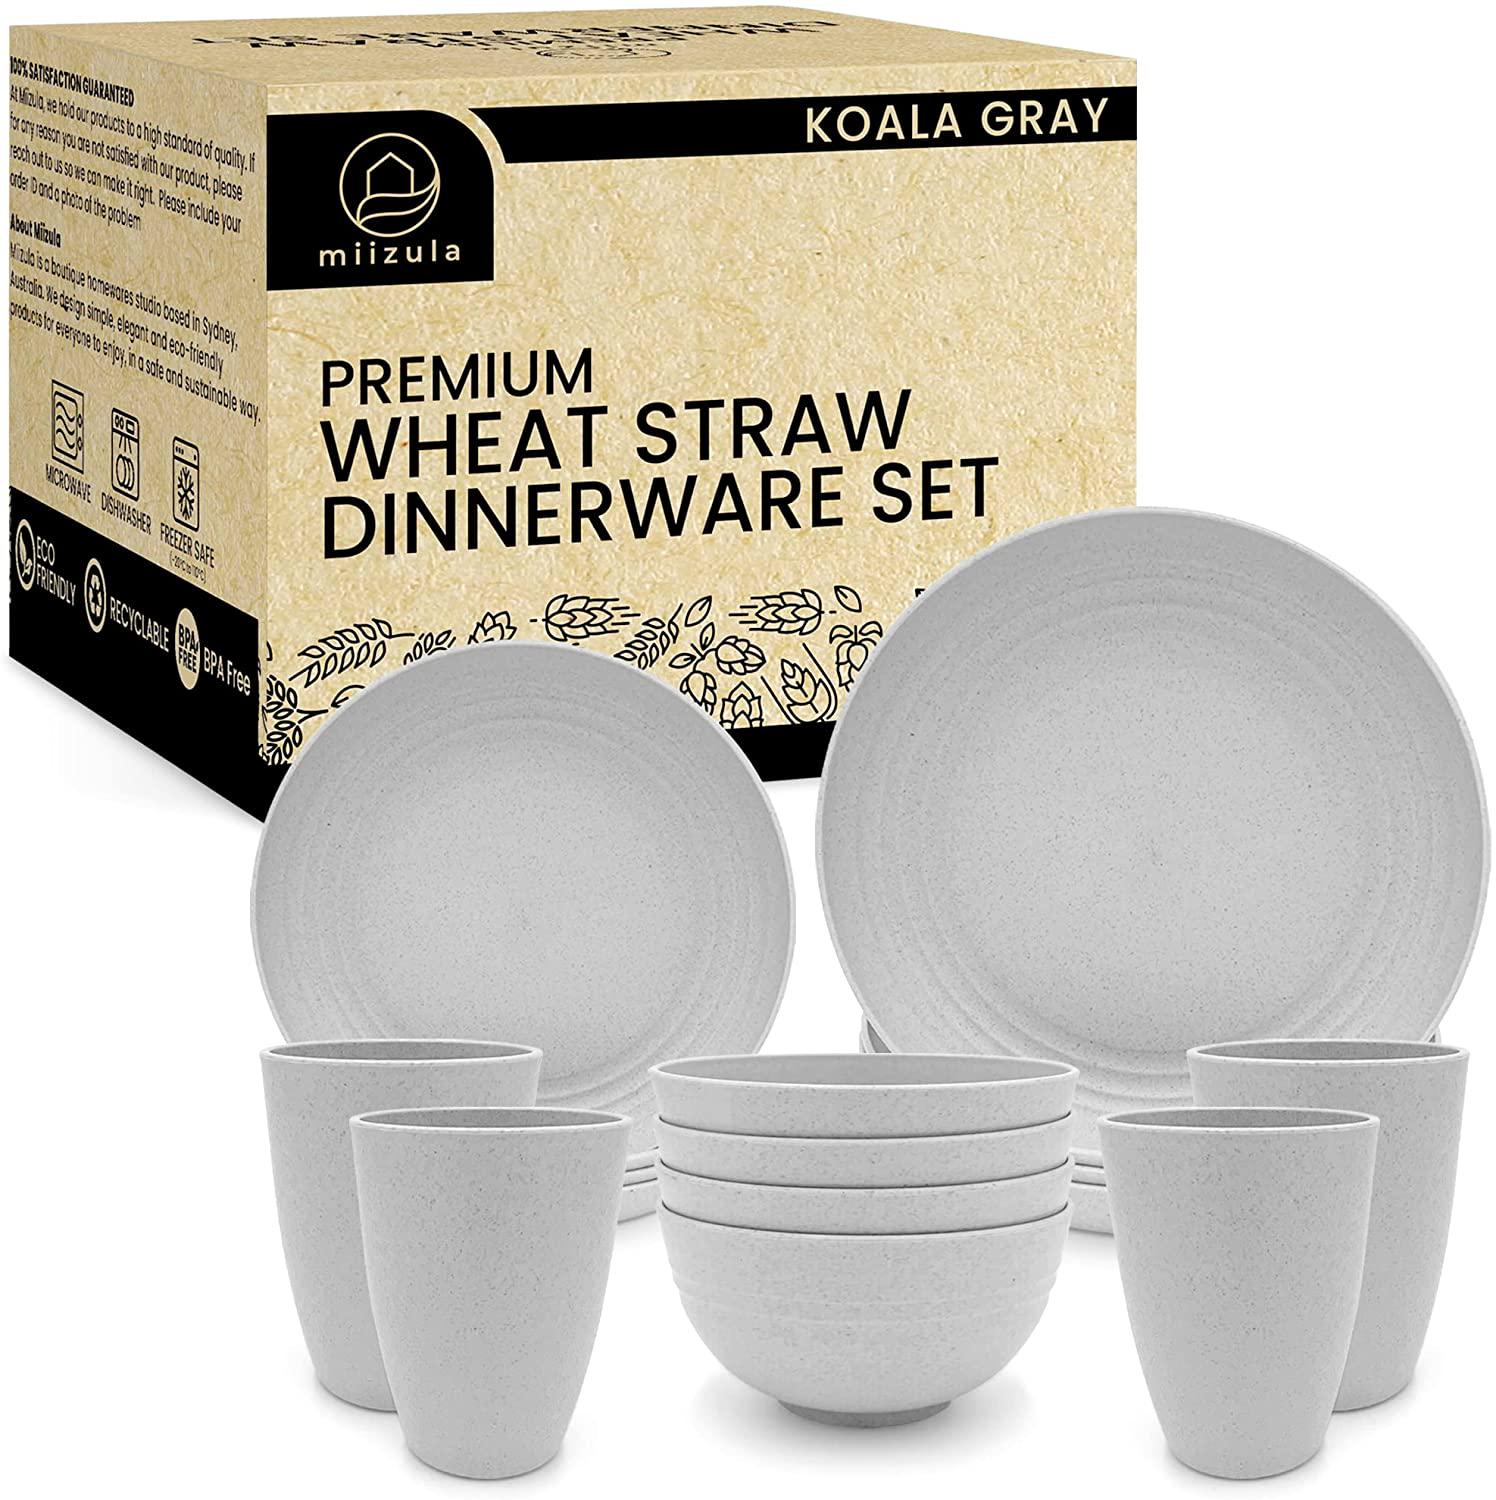 Miizula, Miizula Premium Wheat Straw Dinnerware Set 16-Piece Light Grey - Unbreakable Reusable Dinner Plates and Bowls - Microwave Dishwasher Safe - Eco Friendly